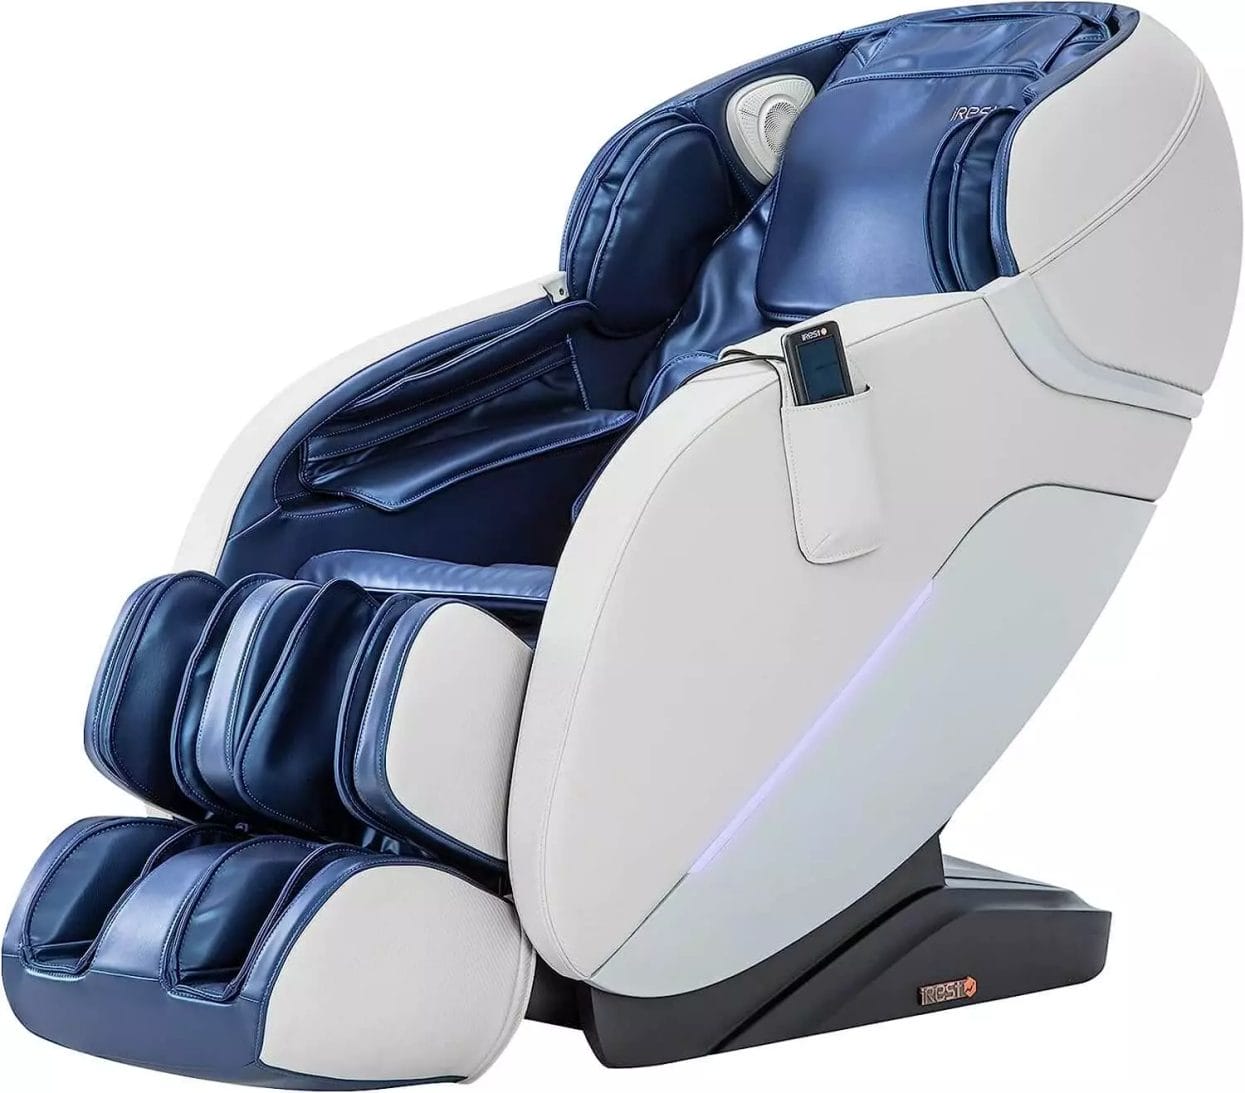 iRest SL Track Massage Chair Recliner, Full Body Massage Chair with Zero Gravity